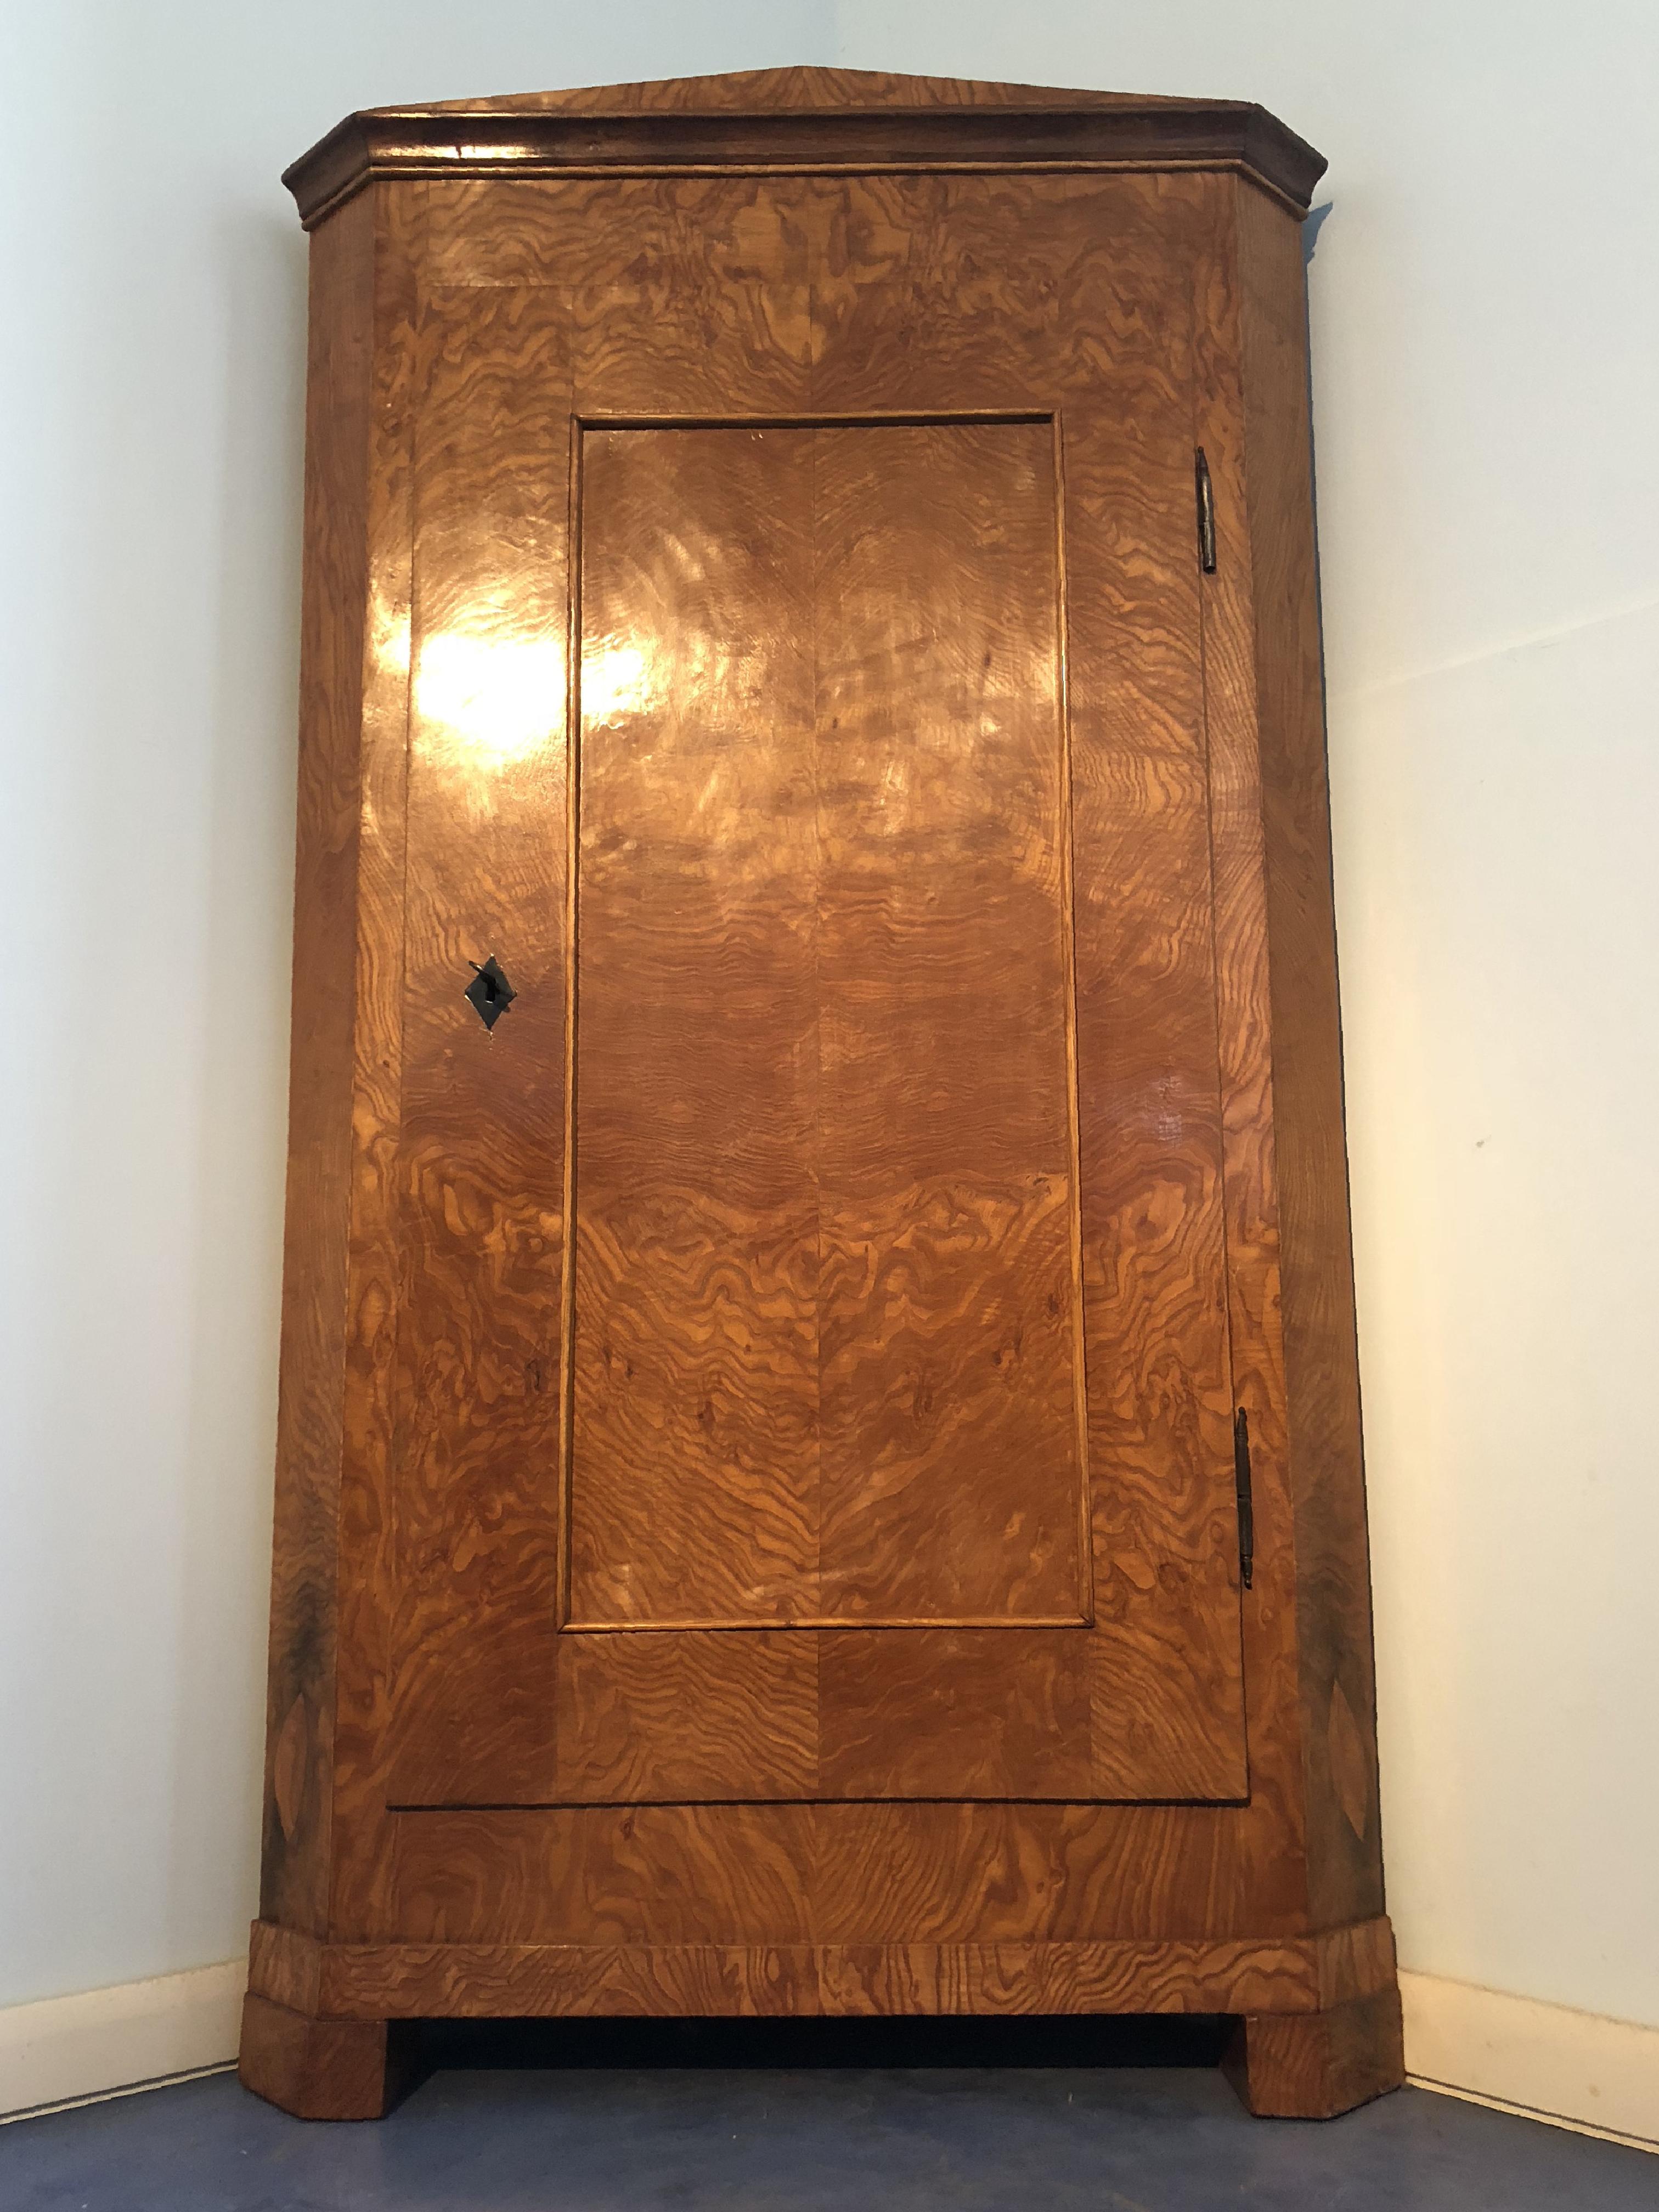 Beautiful Biedermeier elm corner cupboard with authentic antique warm patina.